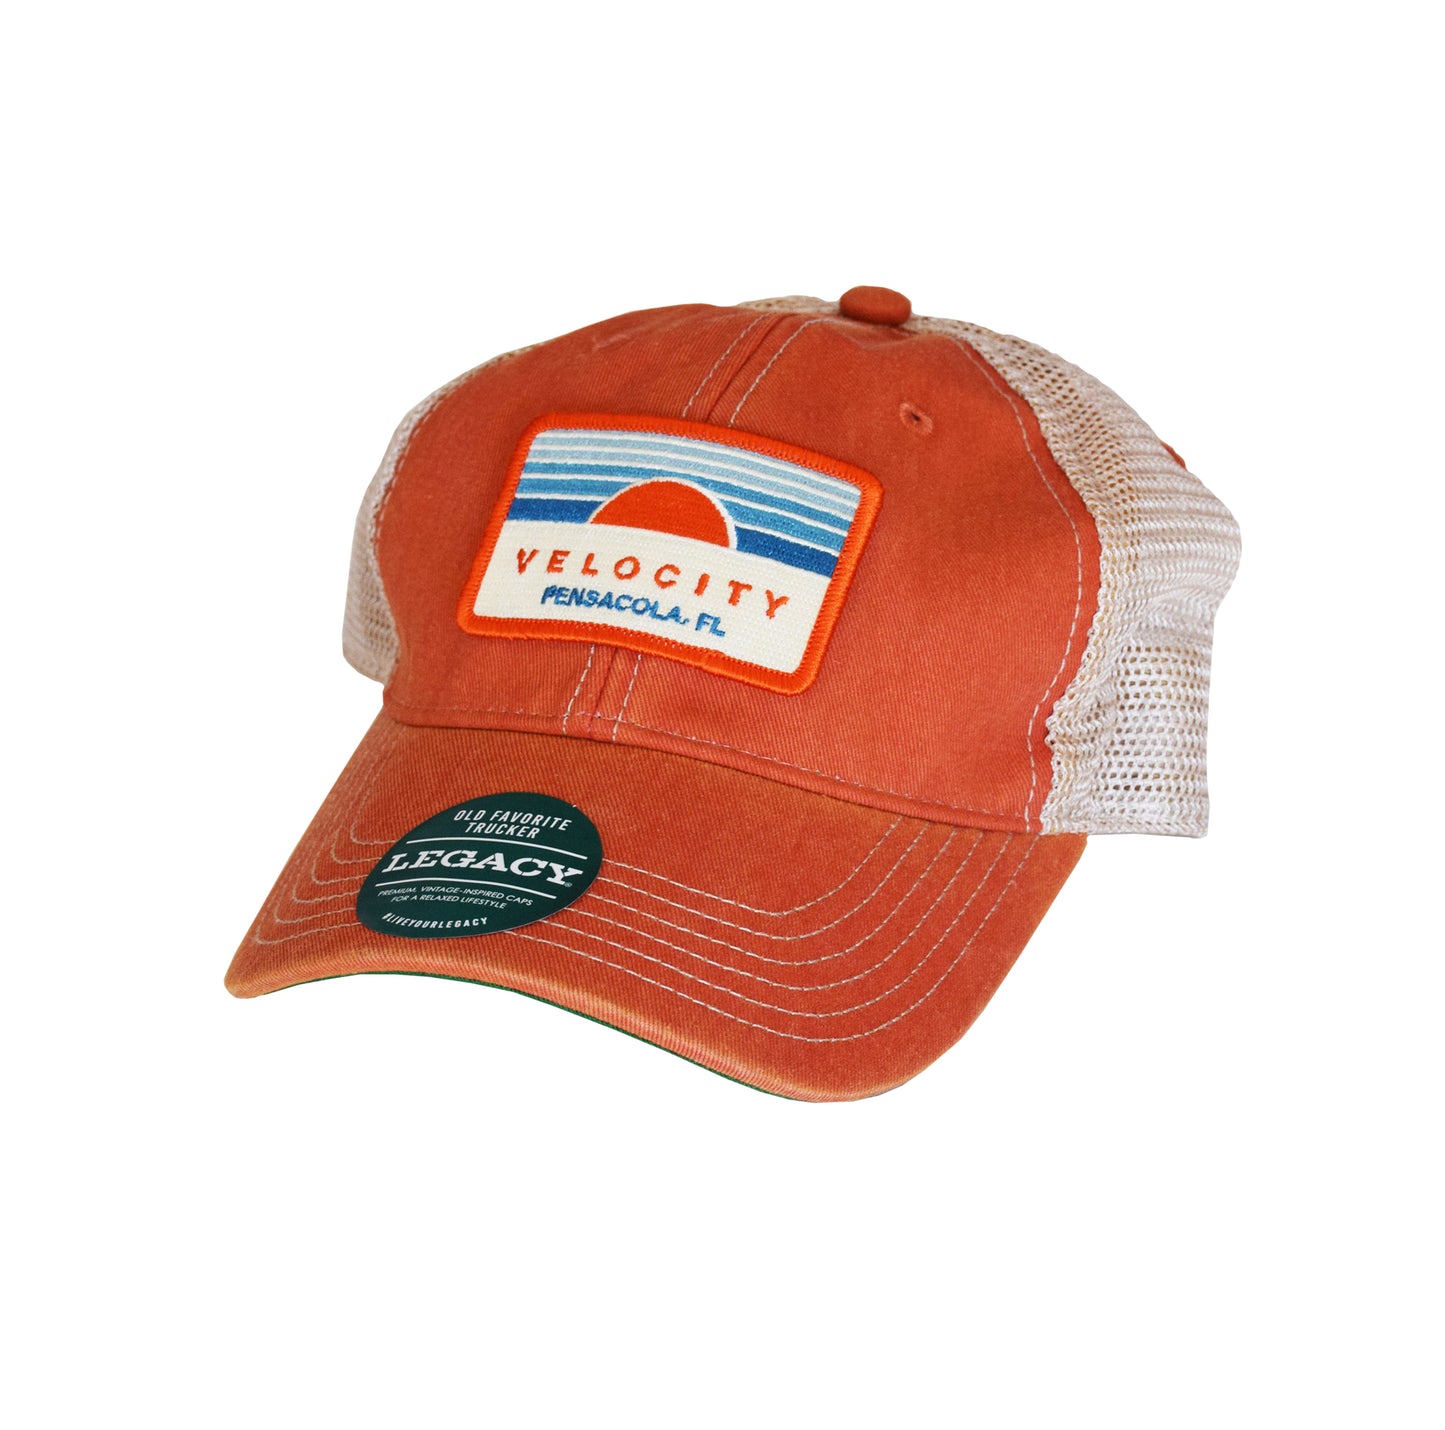 Pensacola Legacy Dad Hat